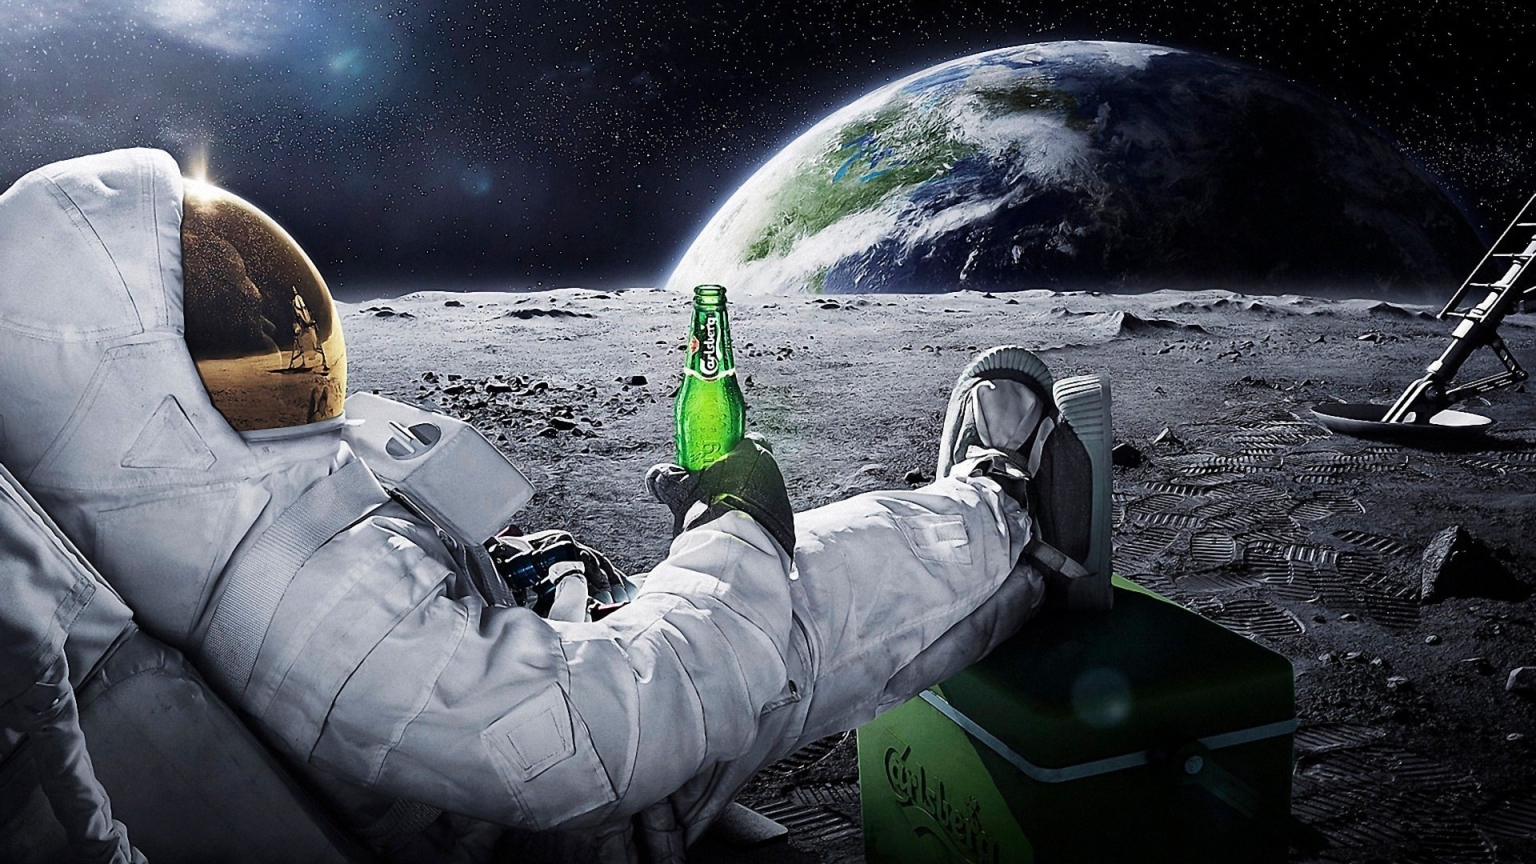 Carlsberg Beer in Space for 1536 x 864 HDTV resolution